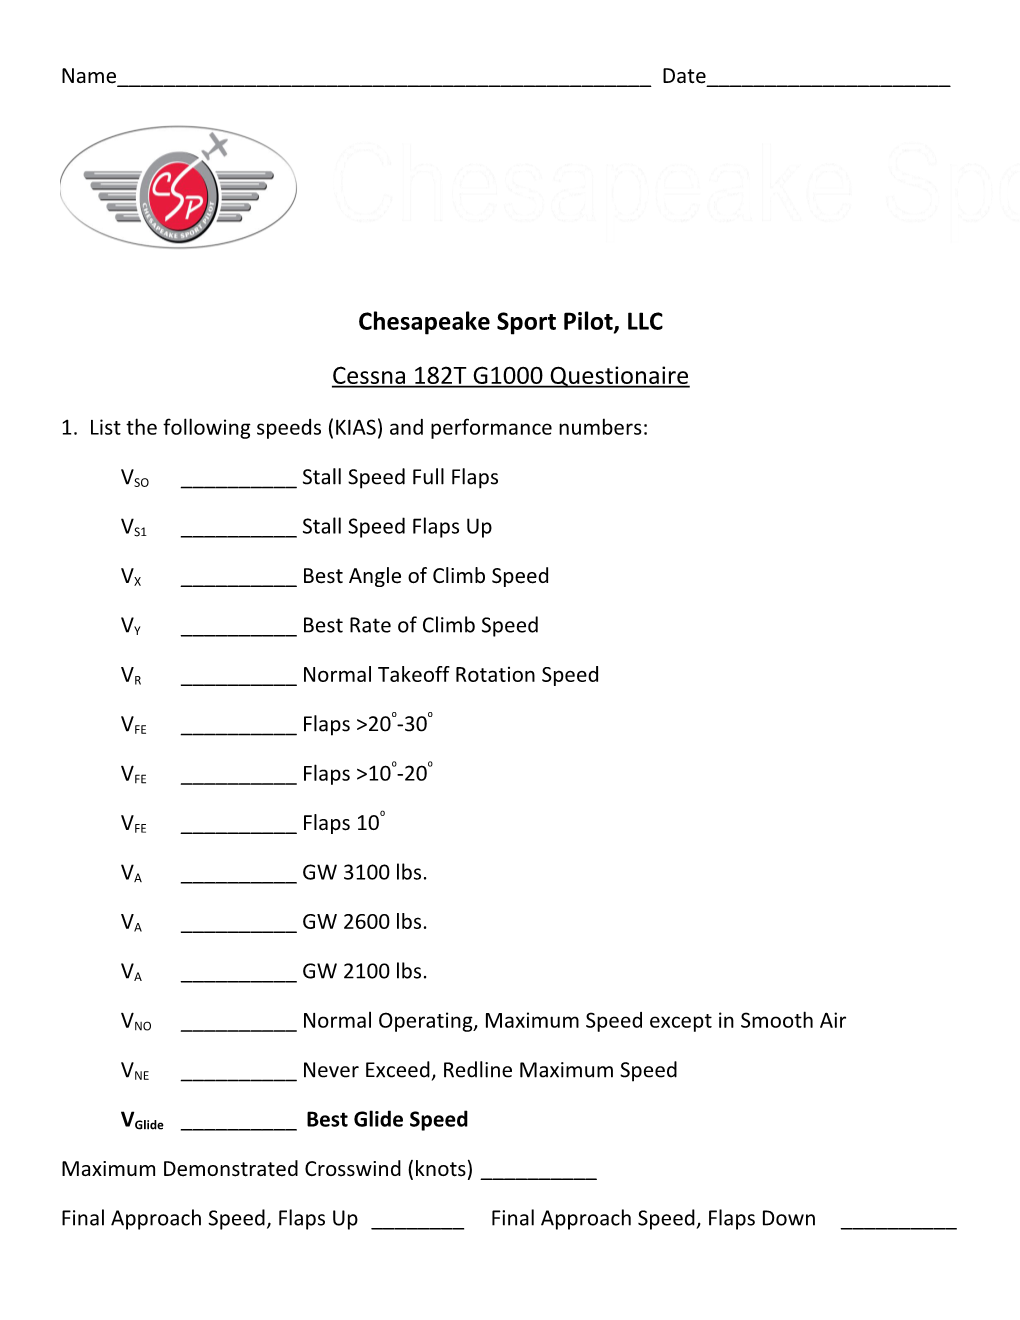 Chesapeake Sport Pilot, LLC